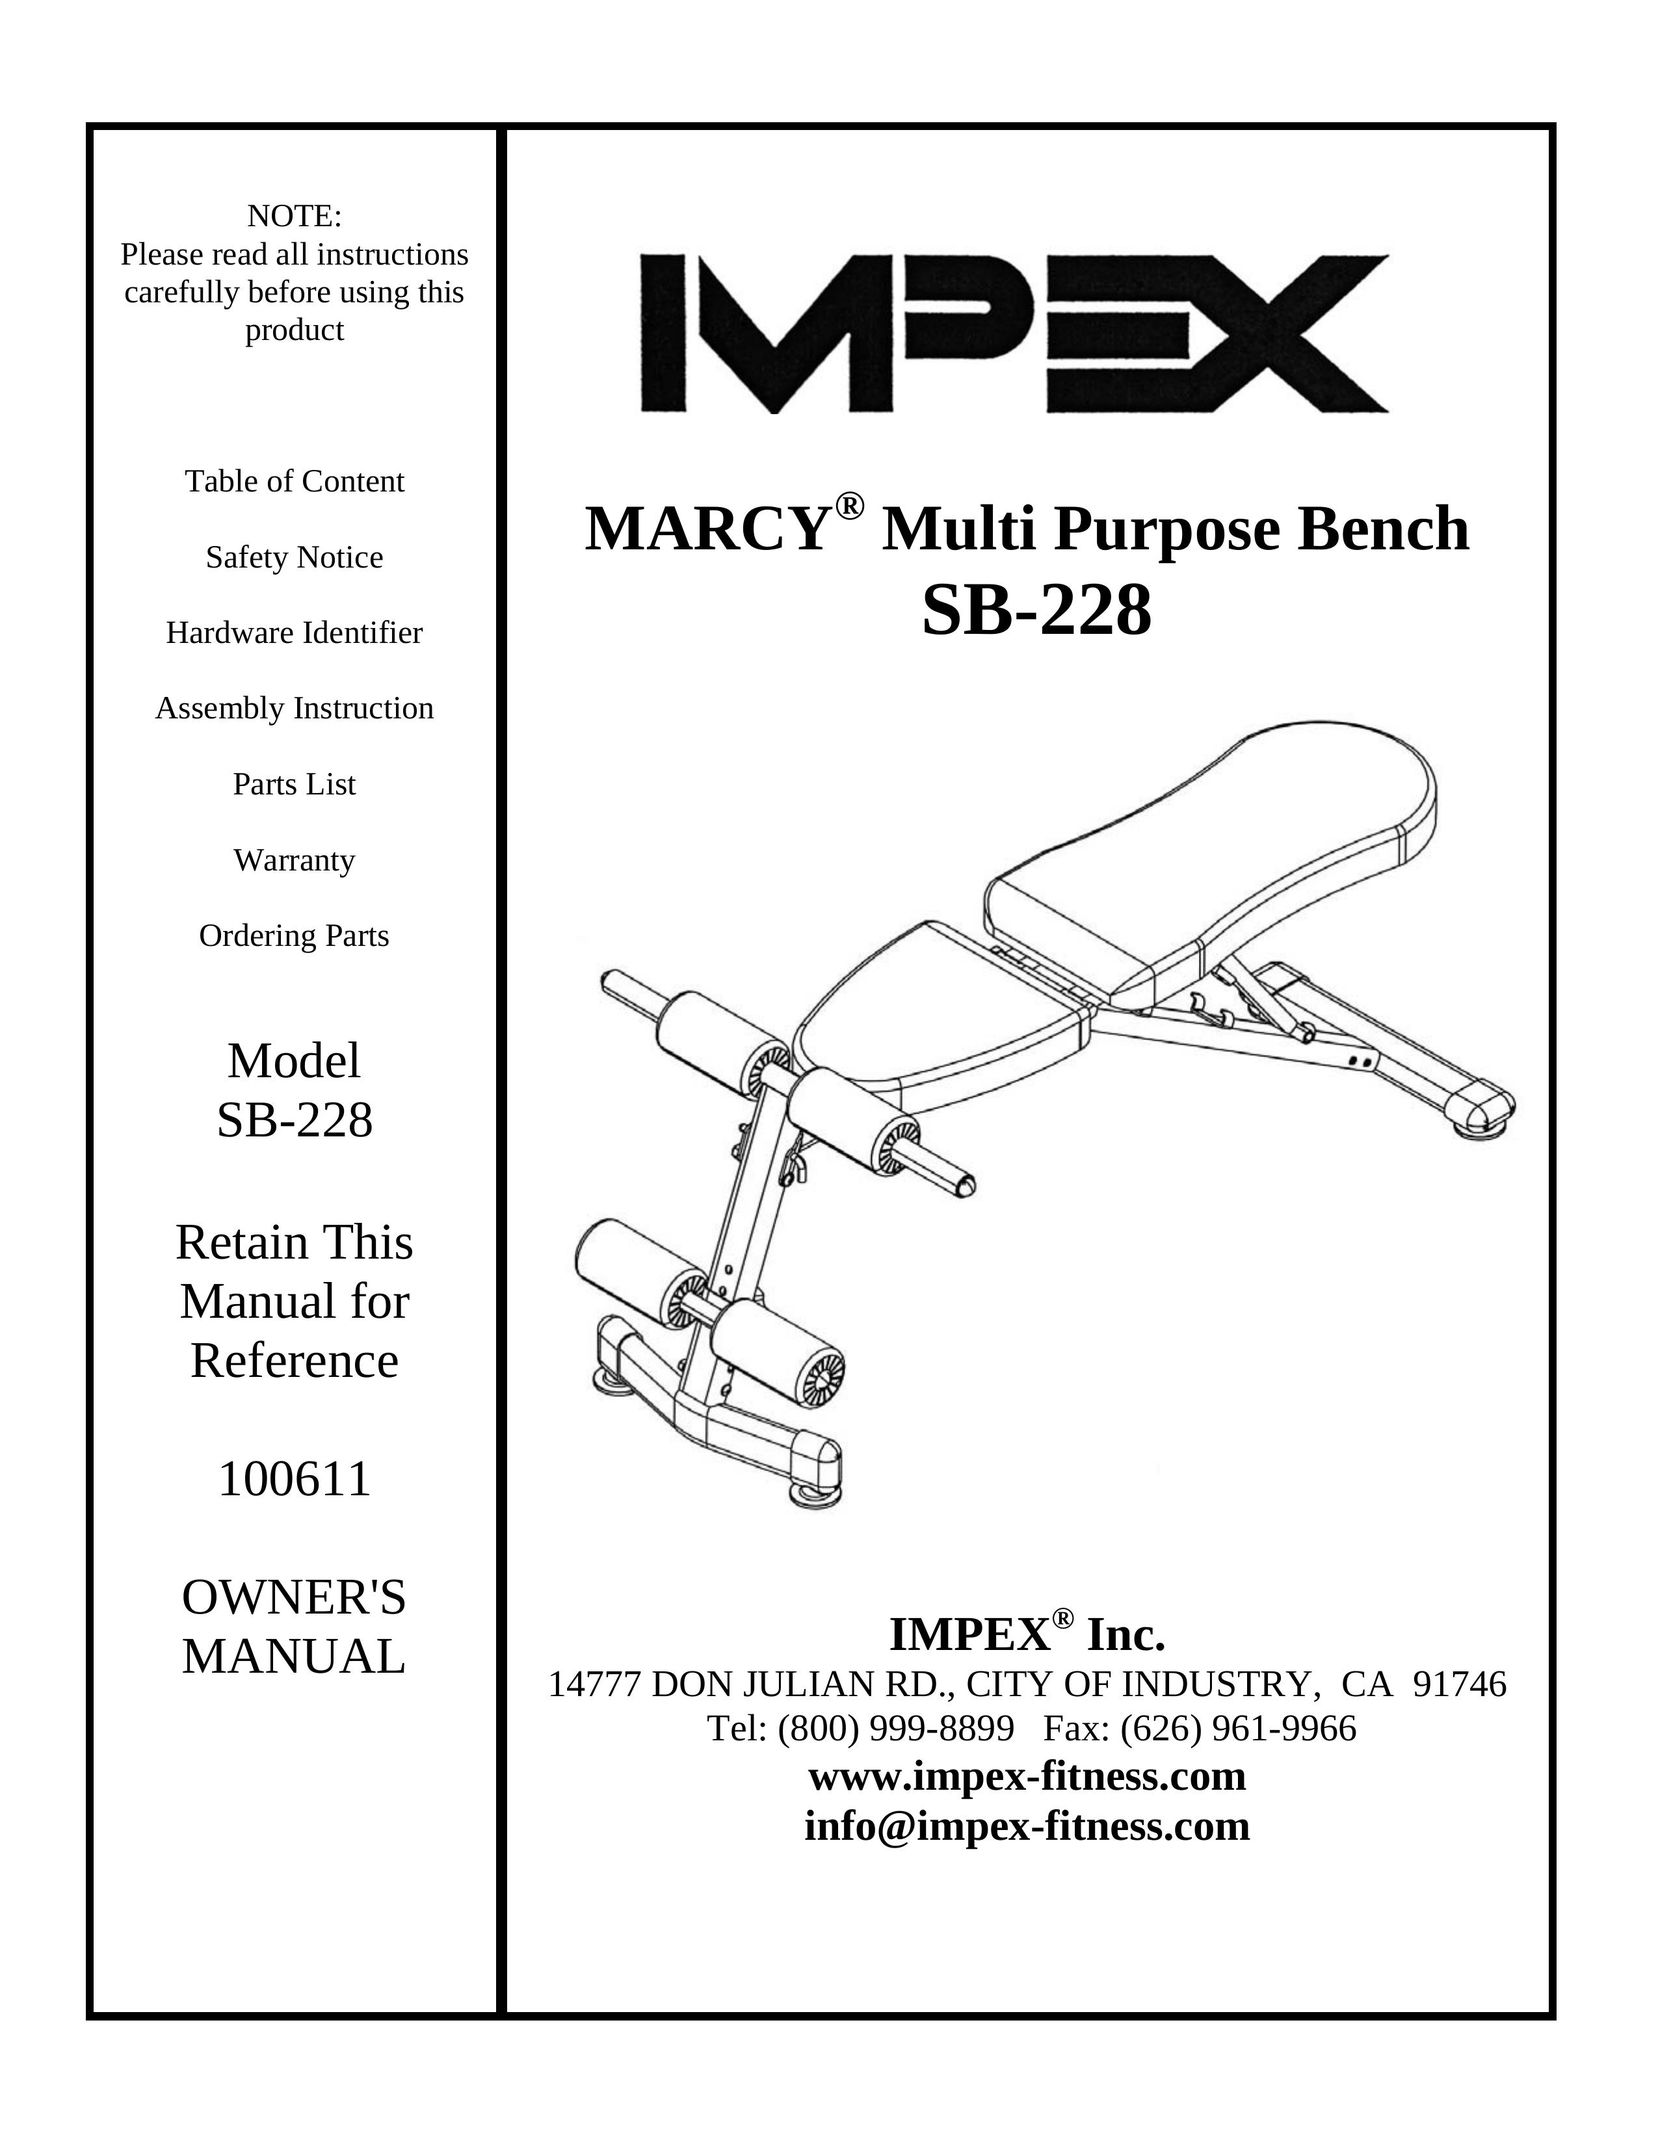 Impex SB-228 Fitness Equipment User Manual